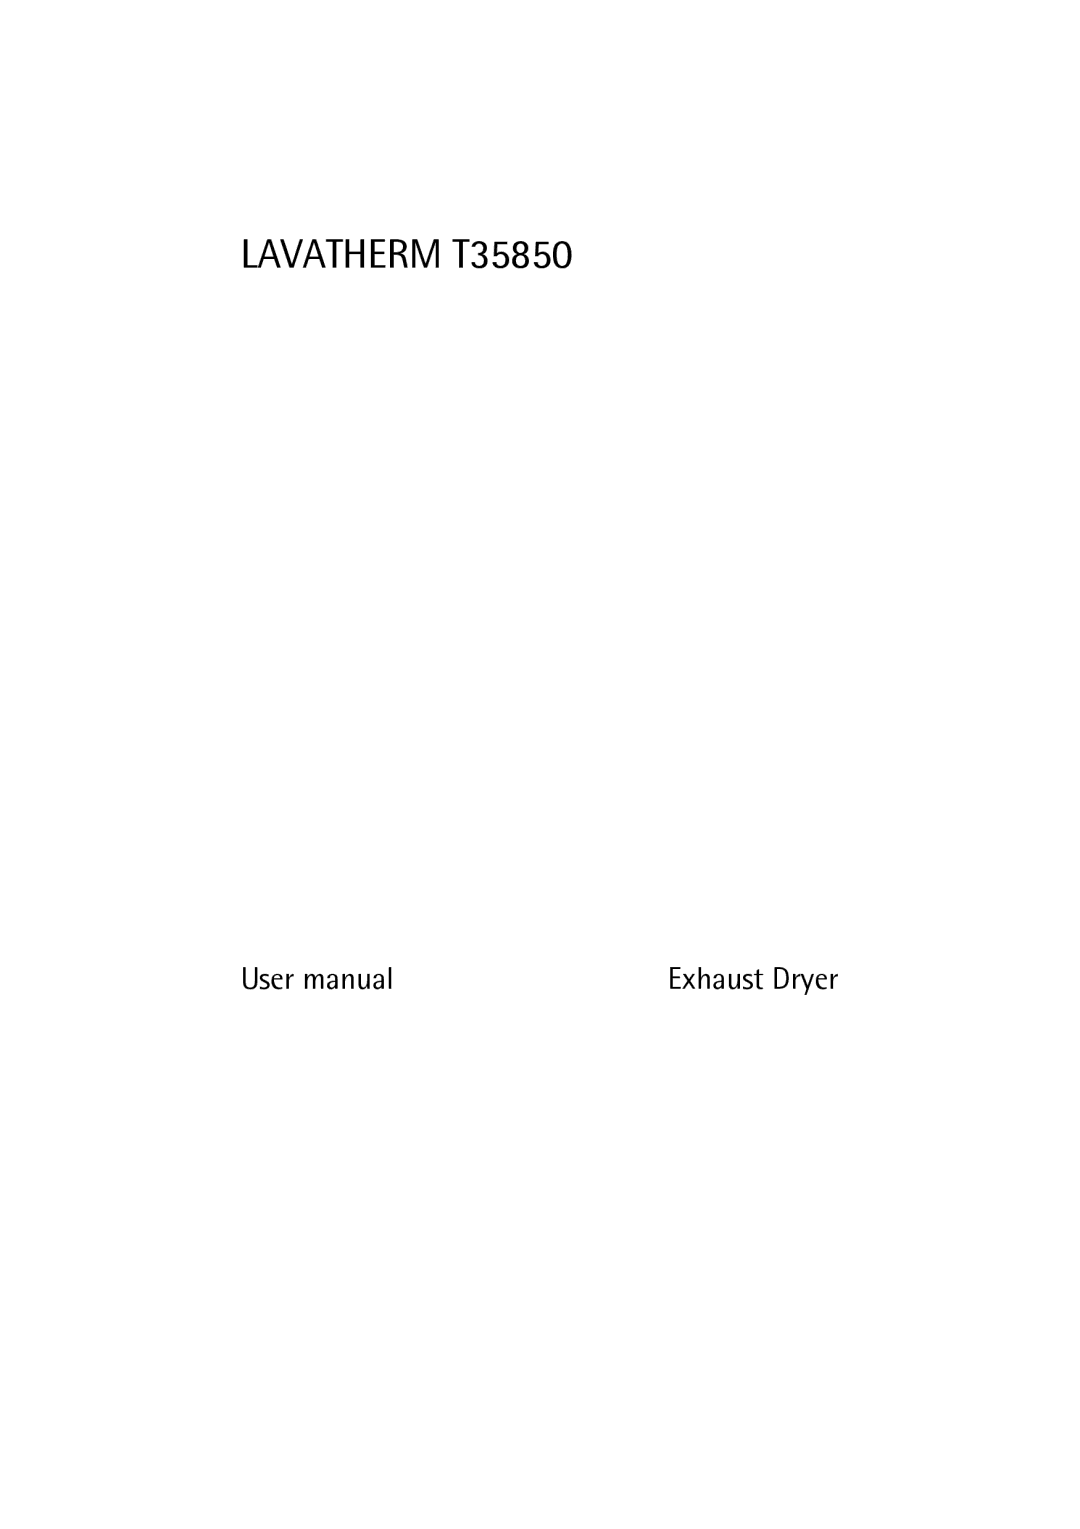 Electrolux user manual Lavatherm T35850 